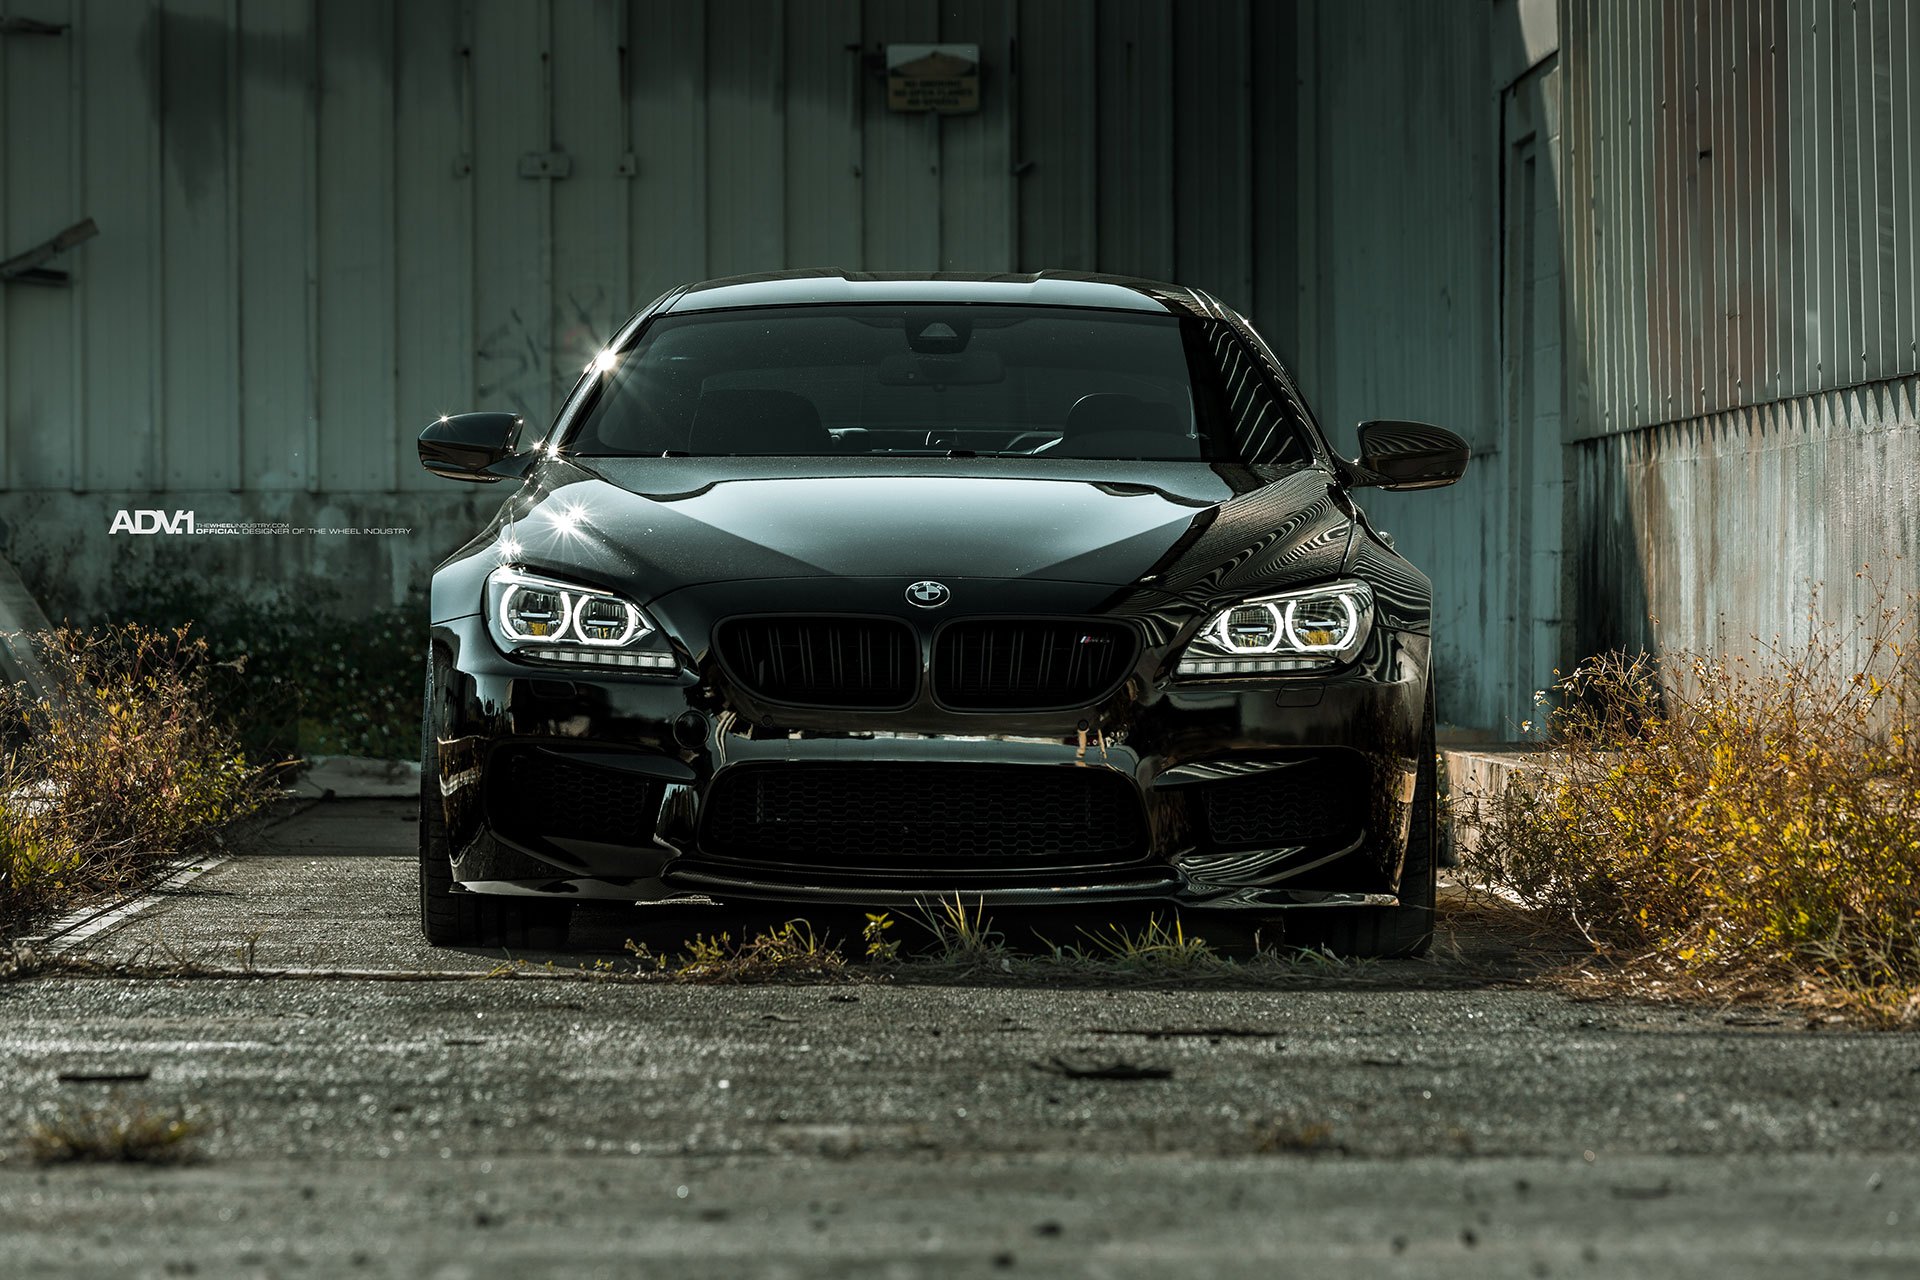 Aftermarket Halo Headlights on Black BMW M6 - Photo by ADV.1